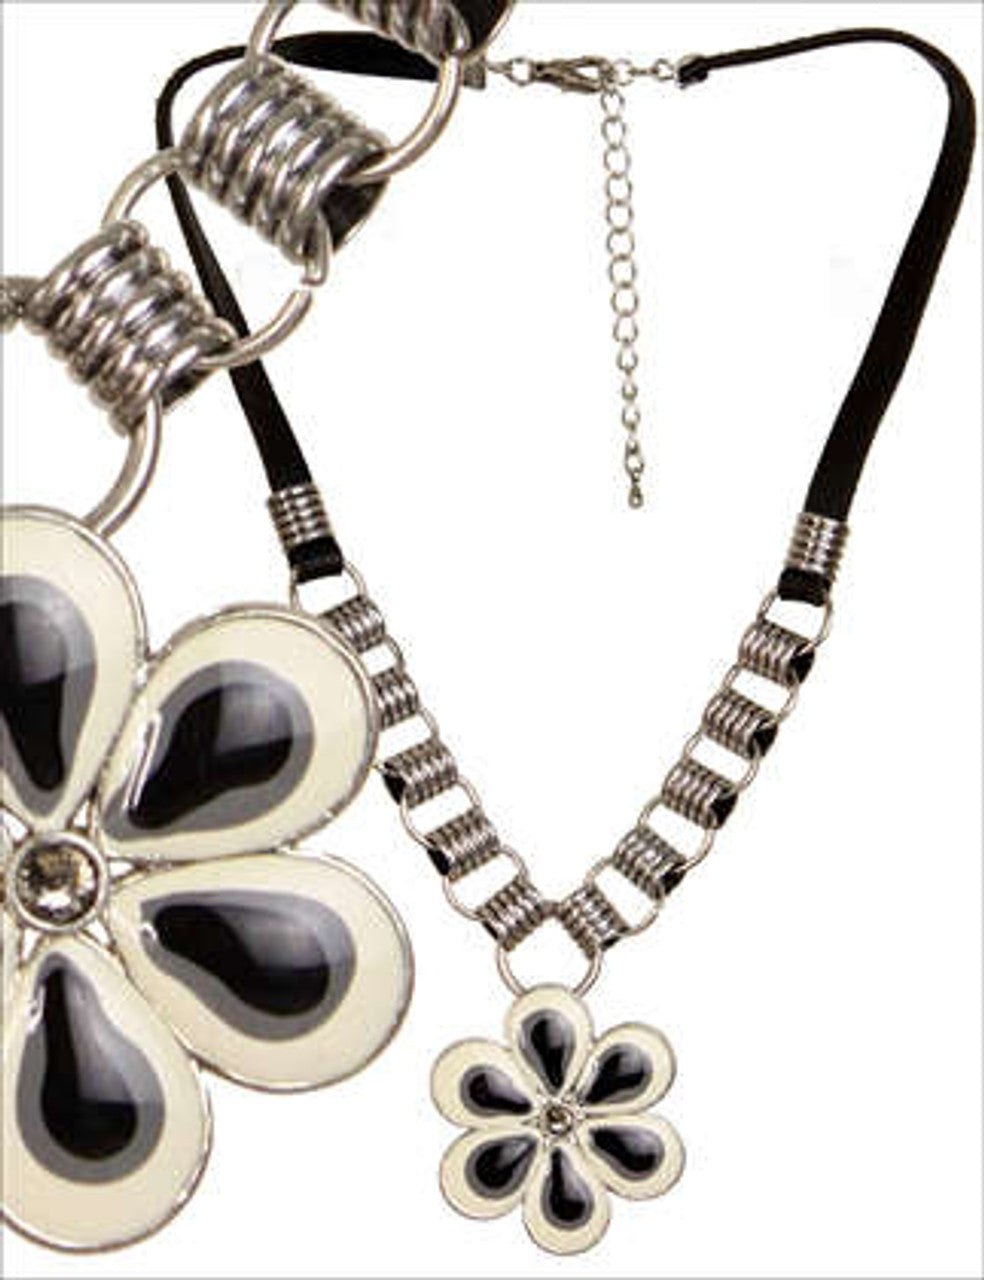 Black & White Flower Necklace